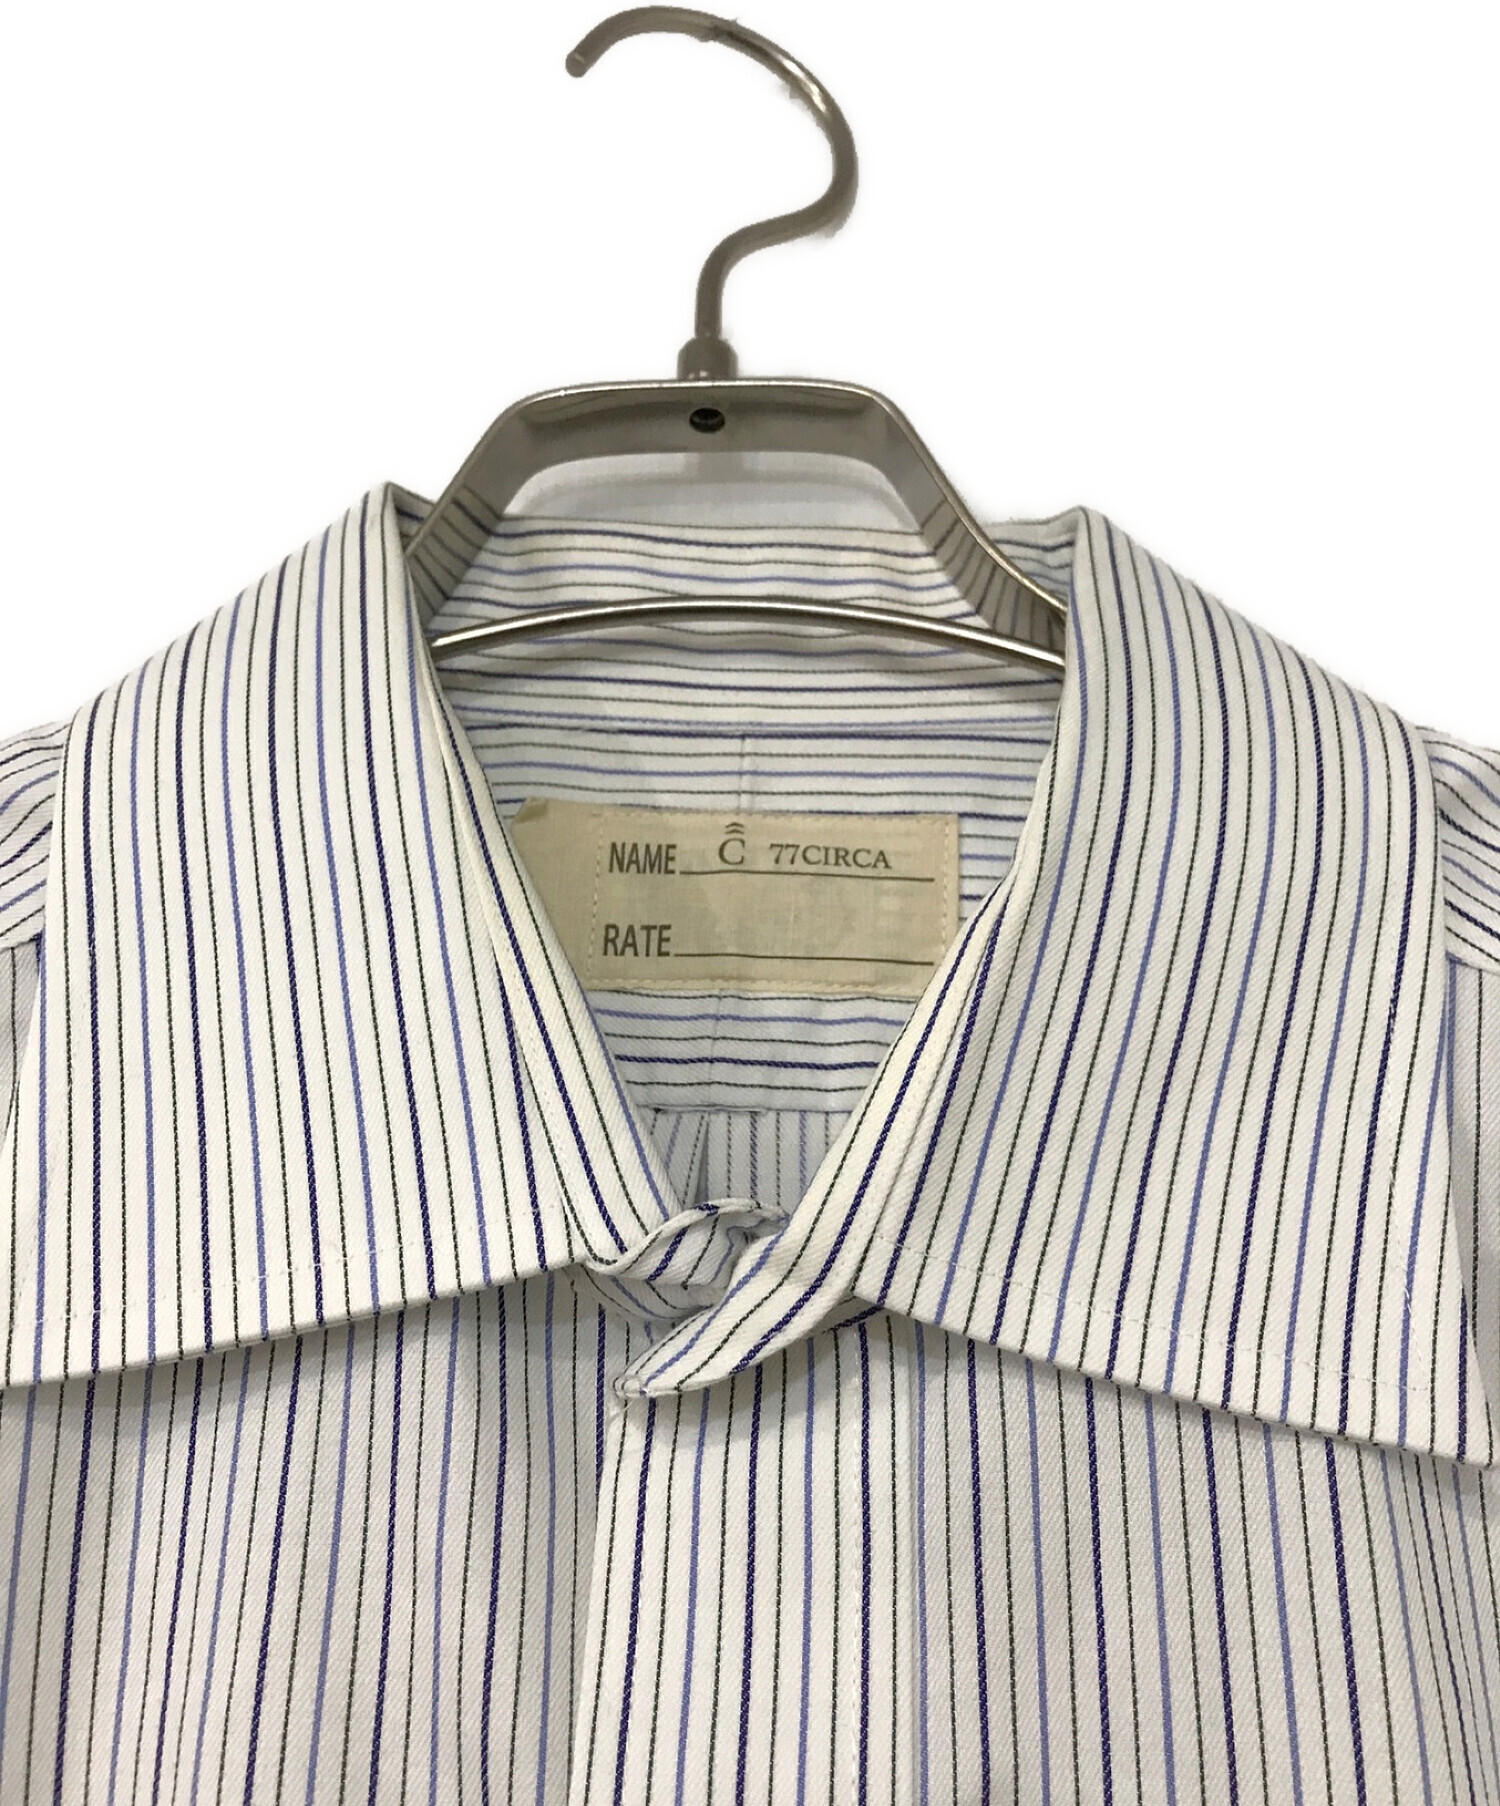 77circa (ナナナナサーカ) circa make width adjustable shirt ホワイト サイズ:表記無し